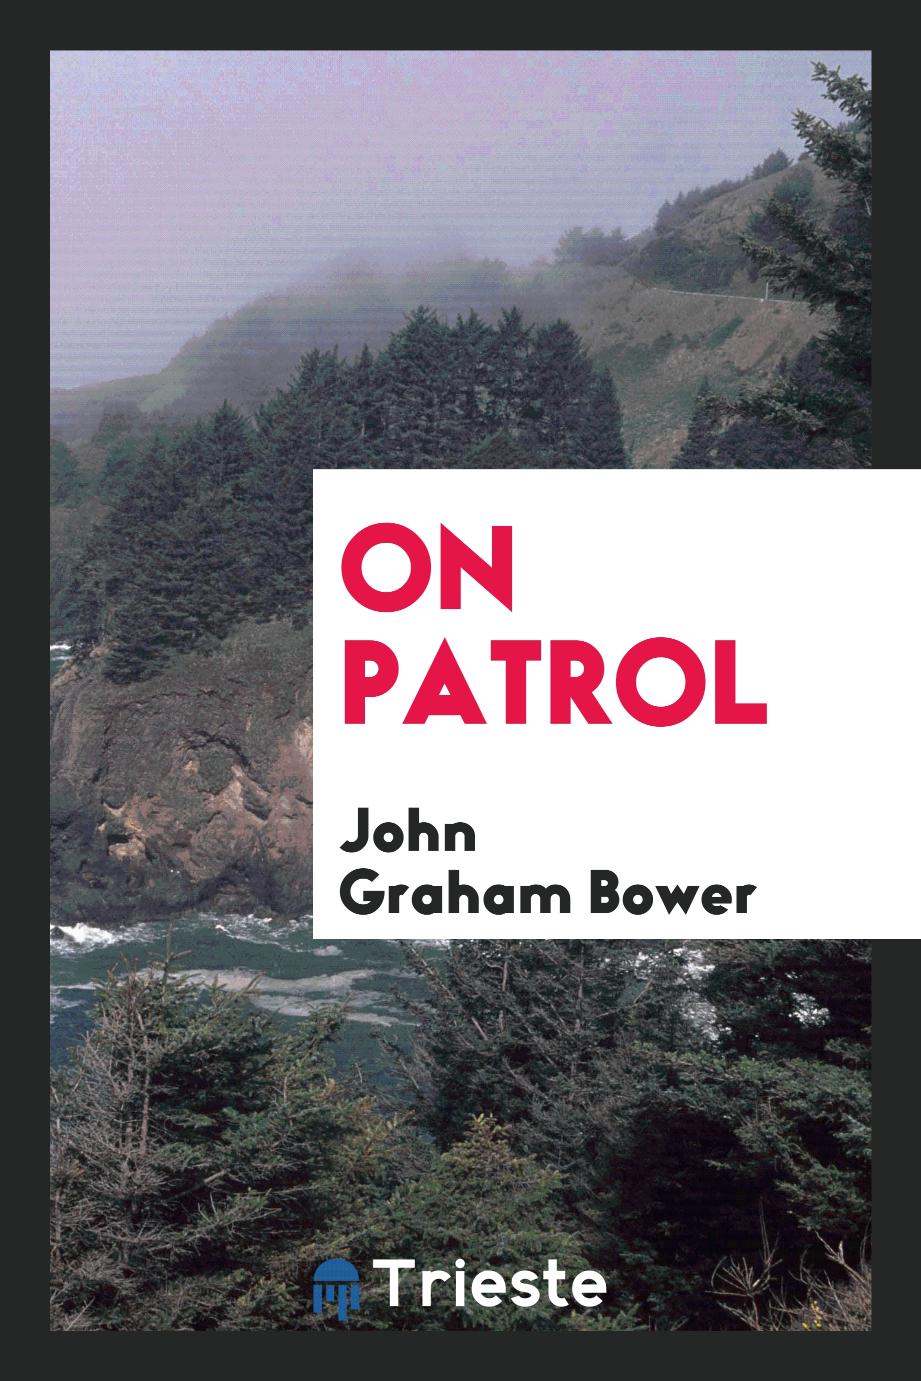 John Graham Bower - On patrol